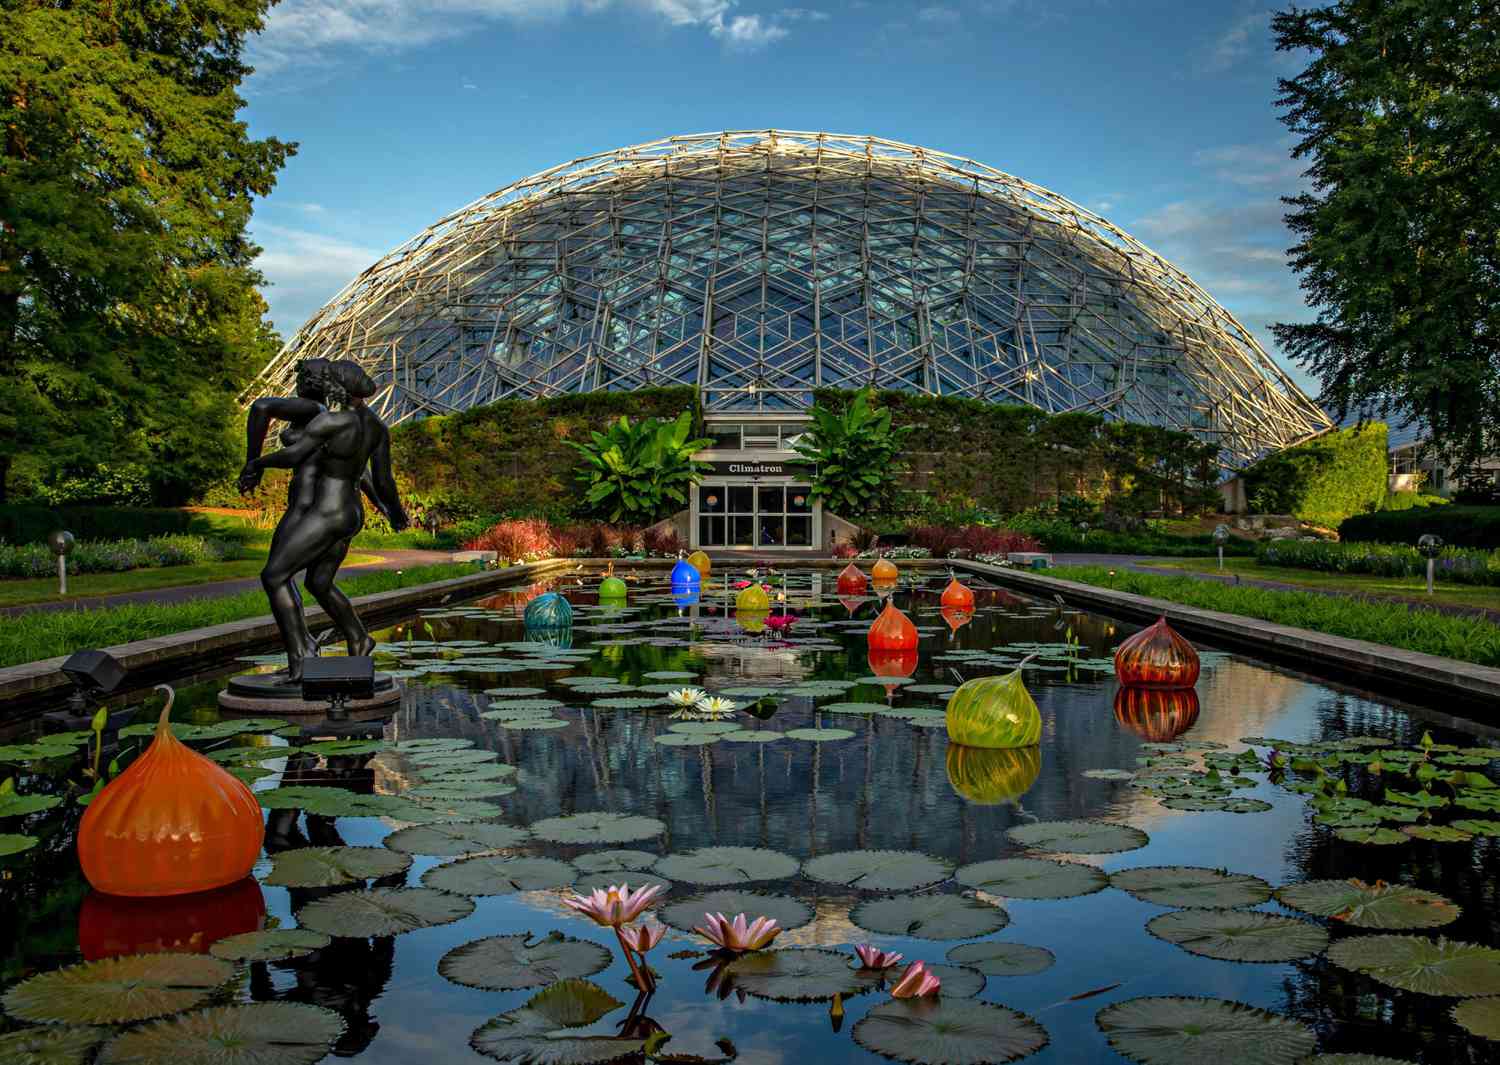 St. Louis: Missouri Botanical Garden